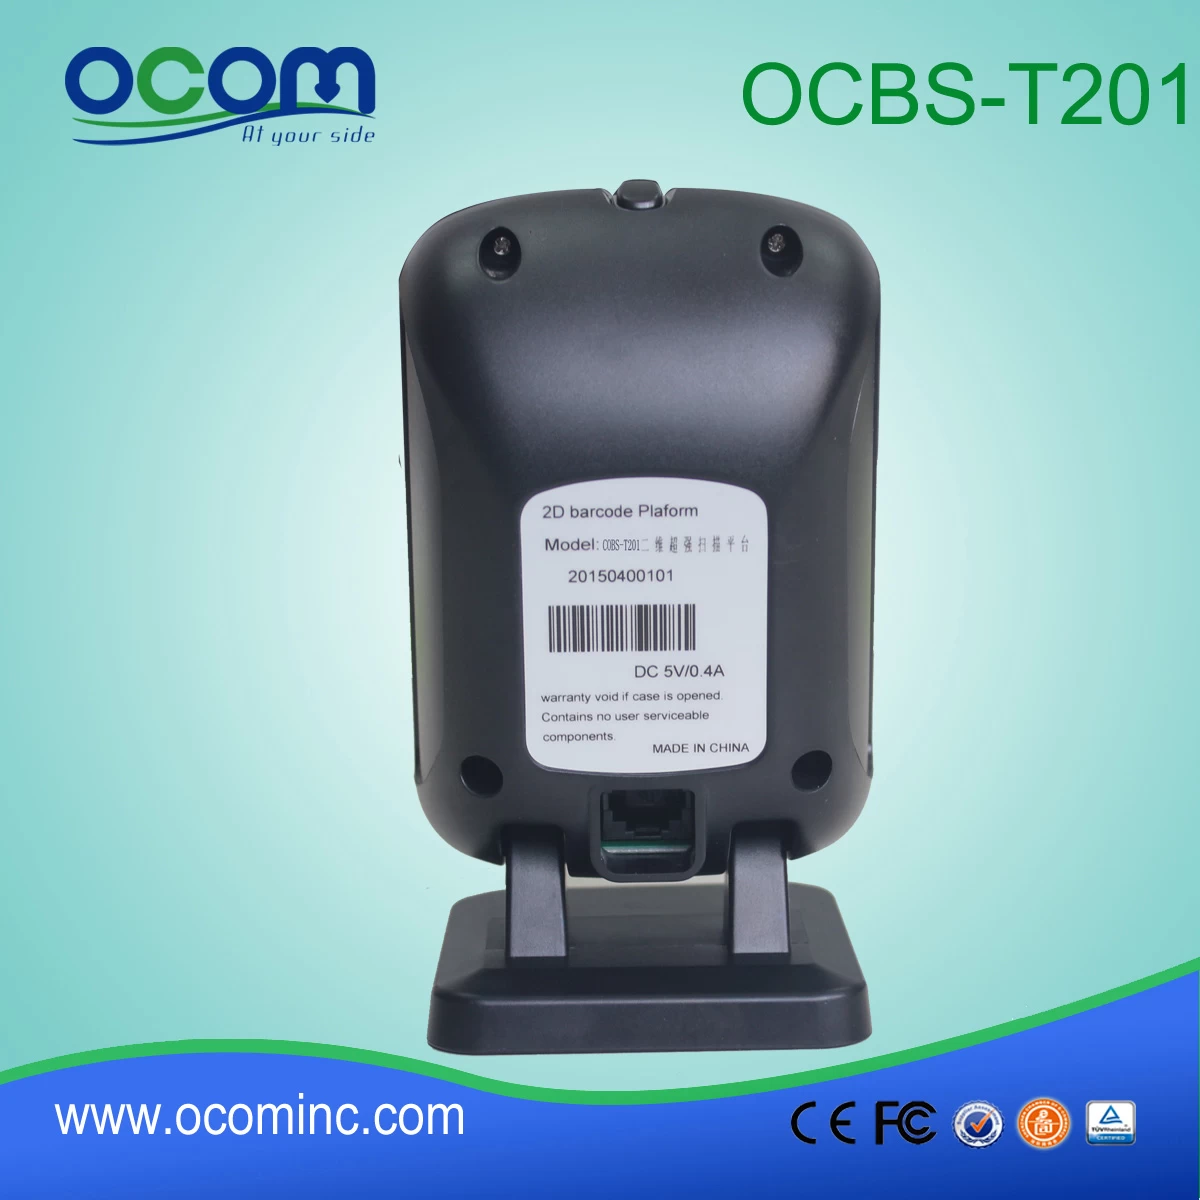 OCBS-T201:2015 hot supply 2d barcode scanner price